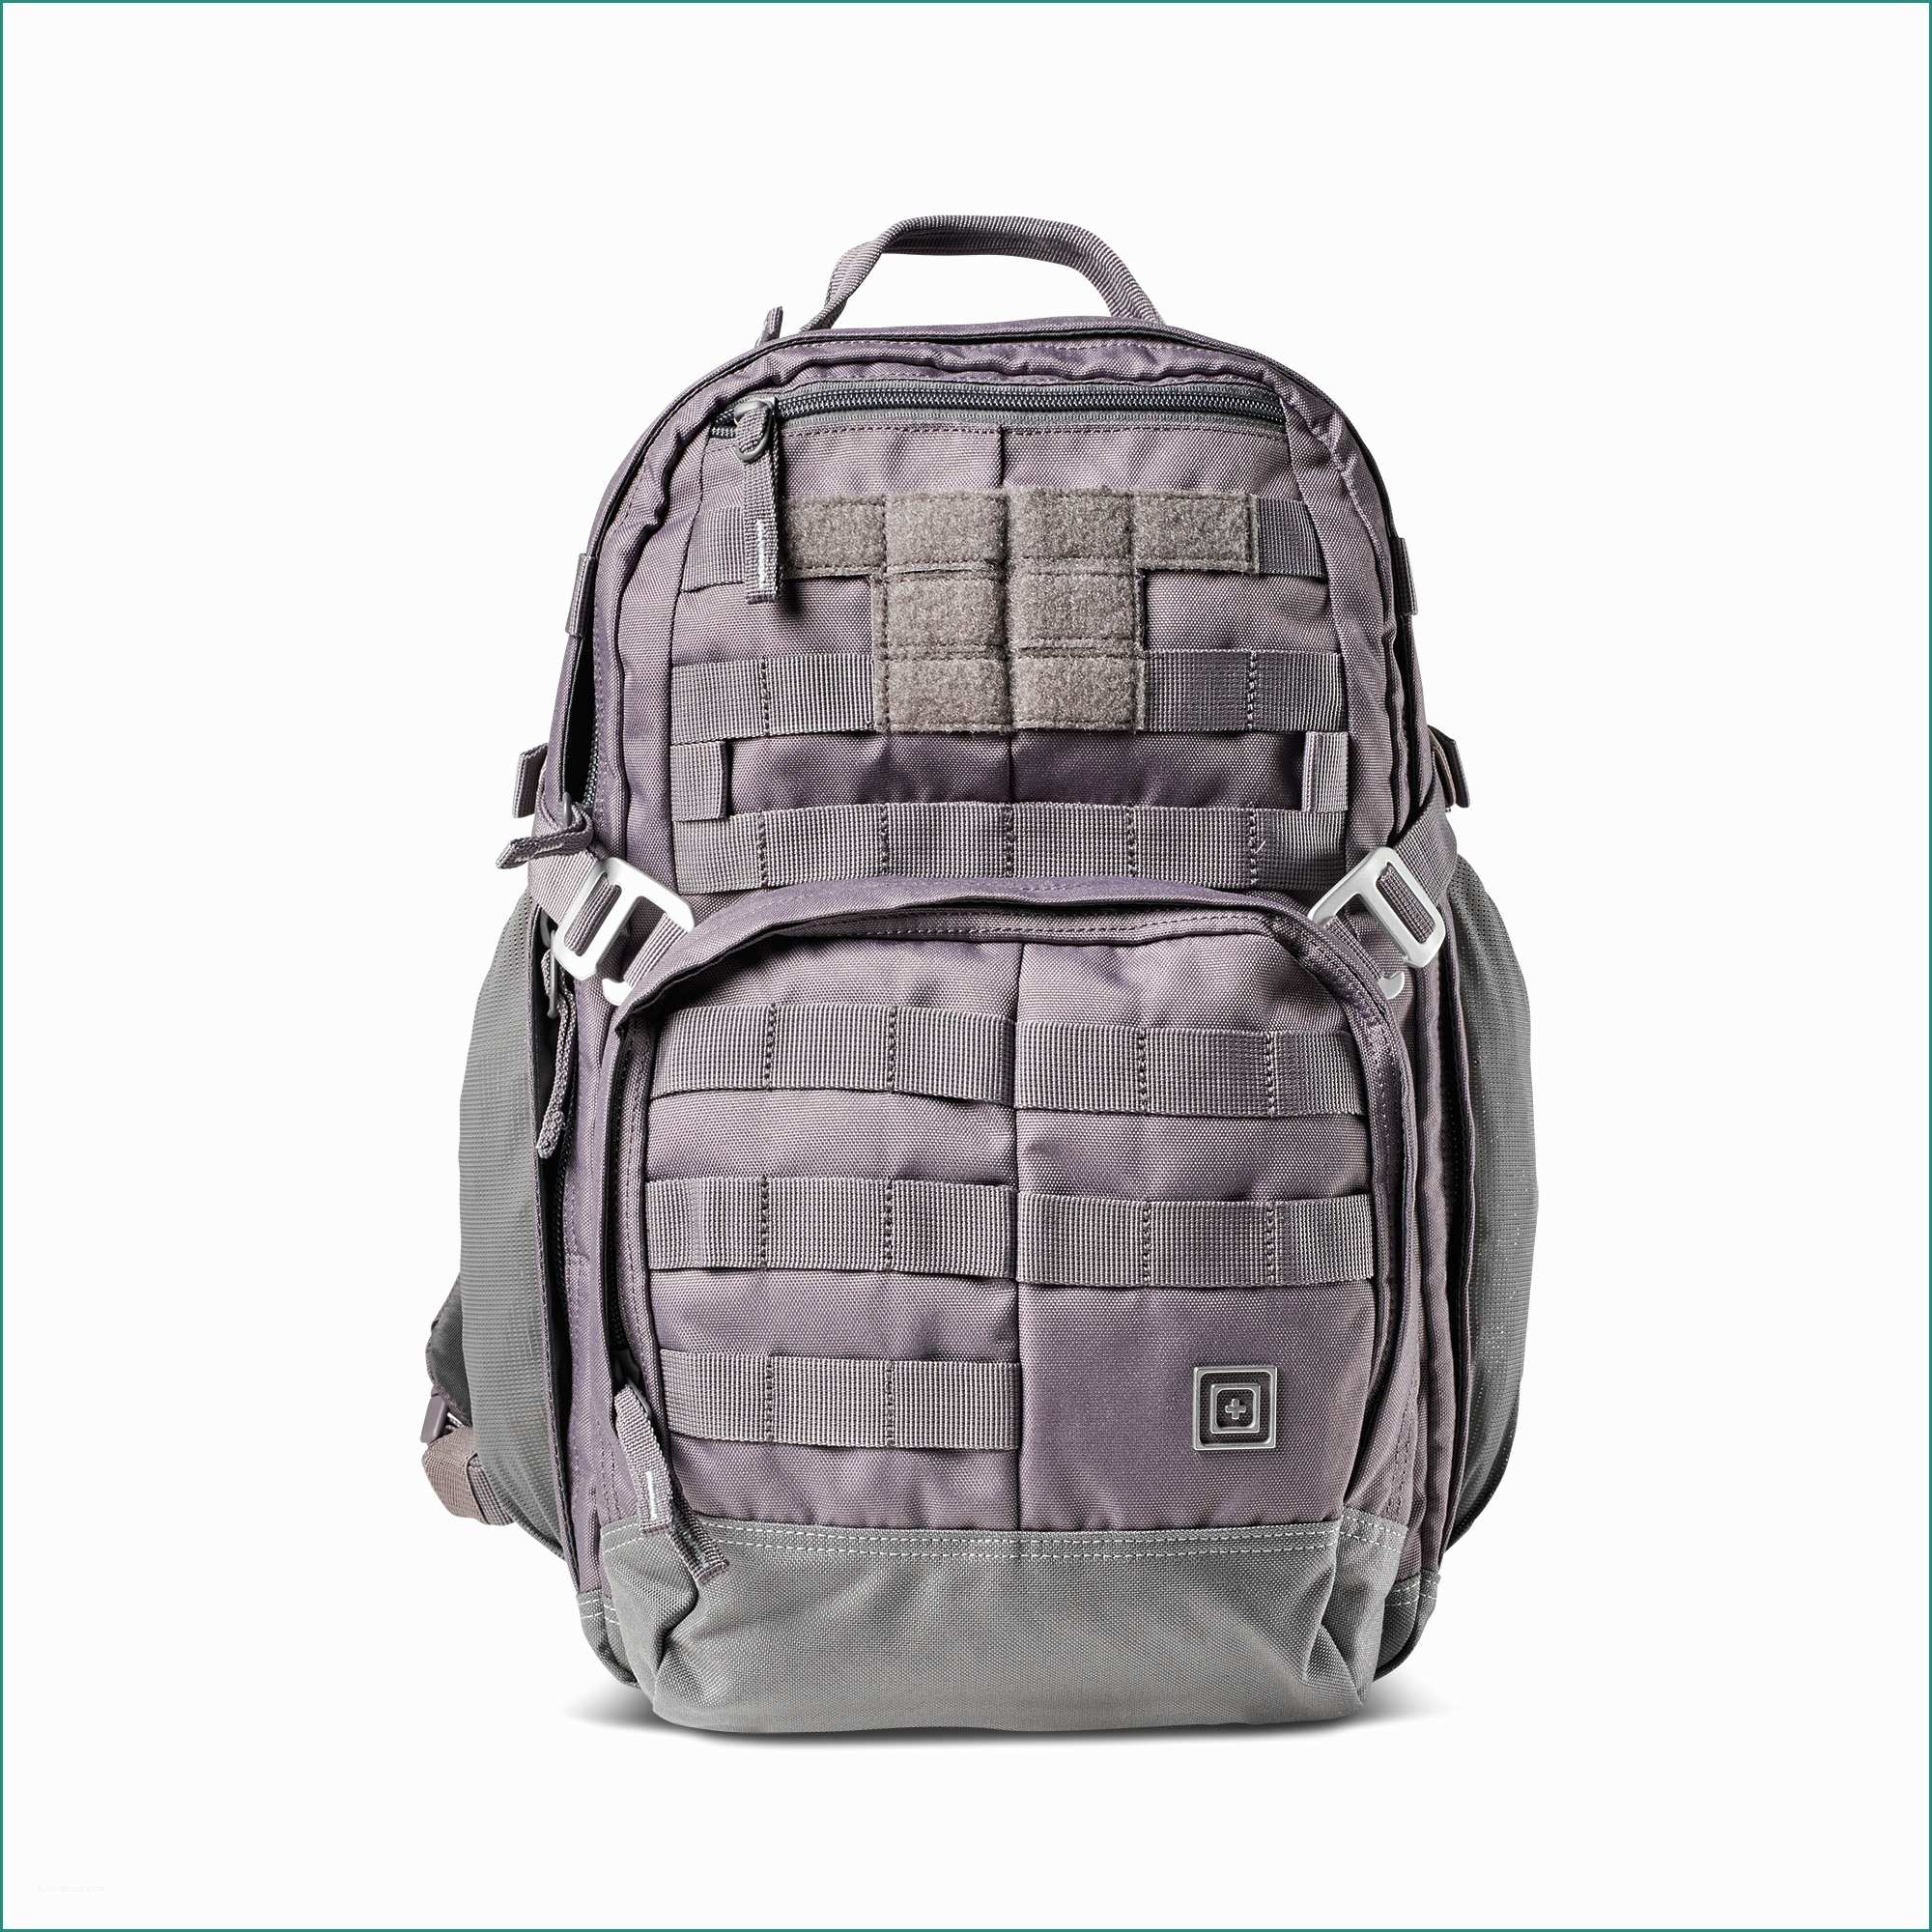 Dimensioni Golf Variant E 5 11 Tactical Rush 12 Tactical Backpack